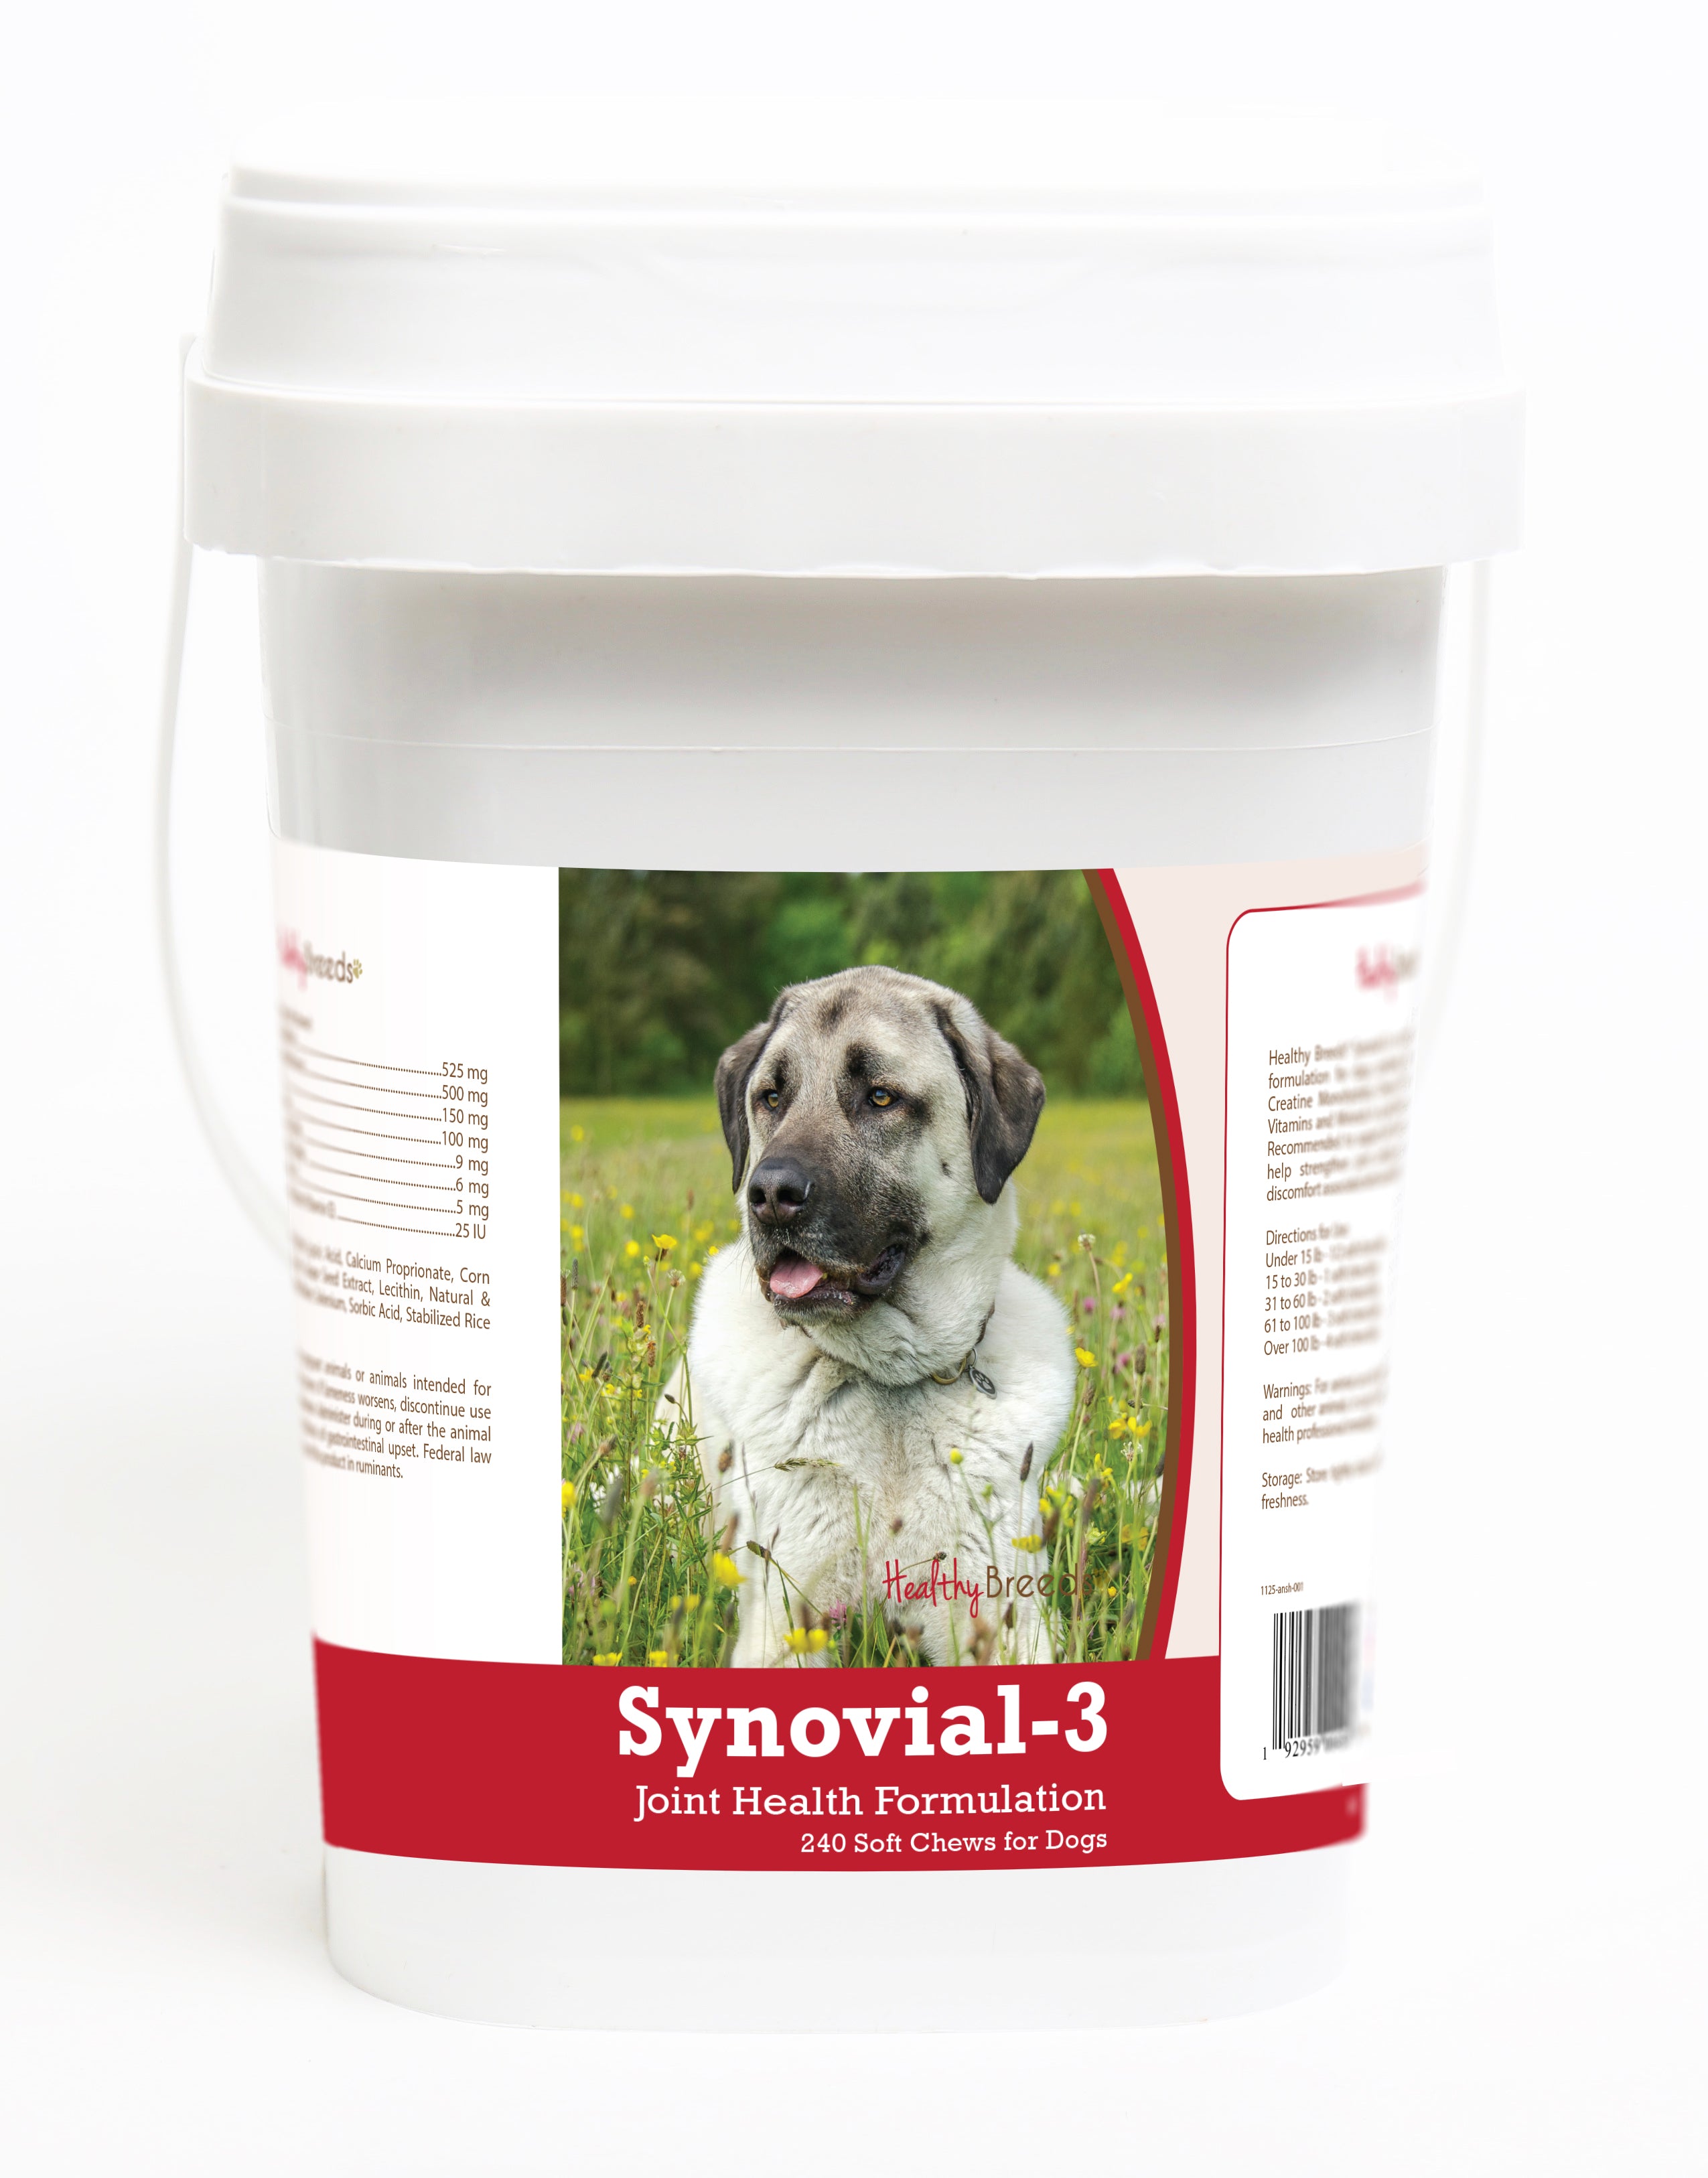 Anatolian Shepherd Dog Synovial-3 Joint Health Formulation Soft Chews 240 Count